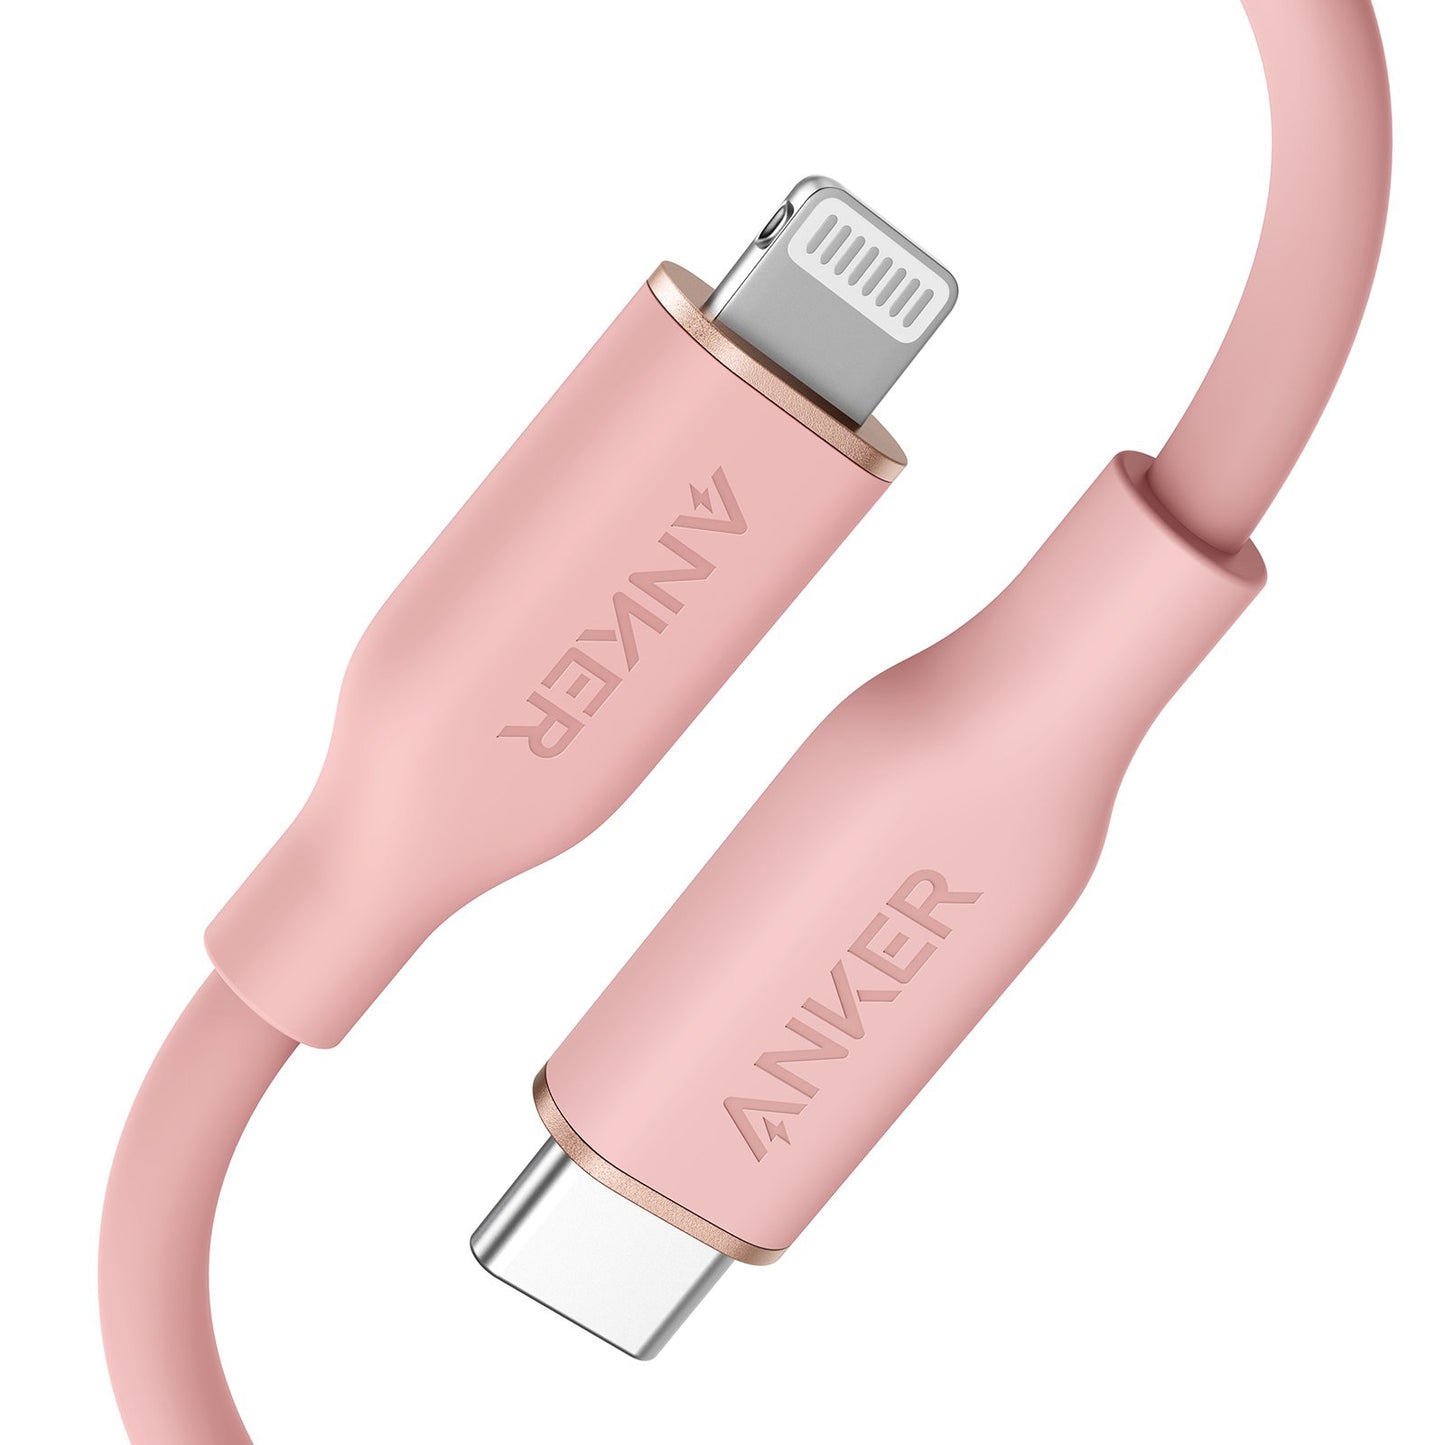 Anker PowerLine III Flow USB-C - Lightning 充電線